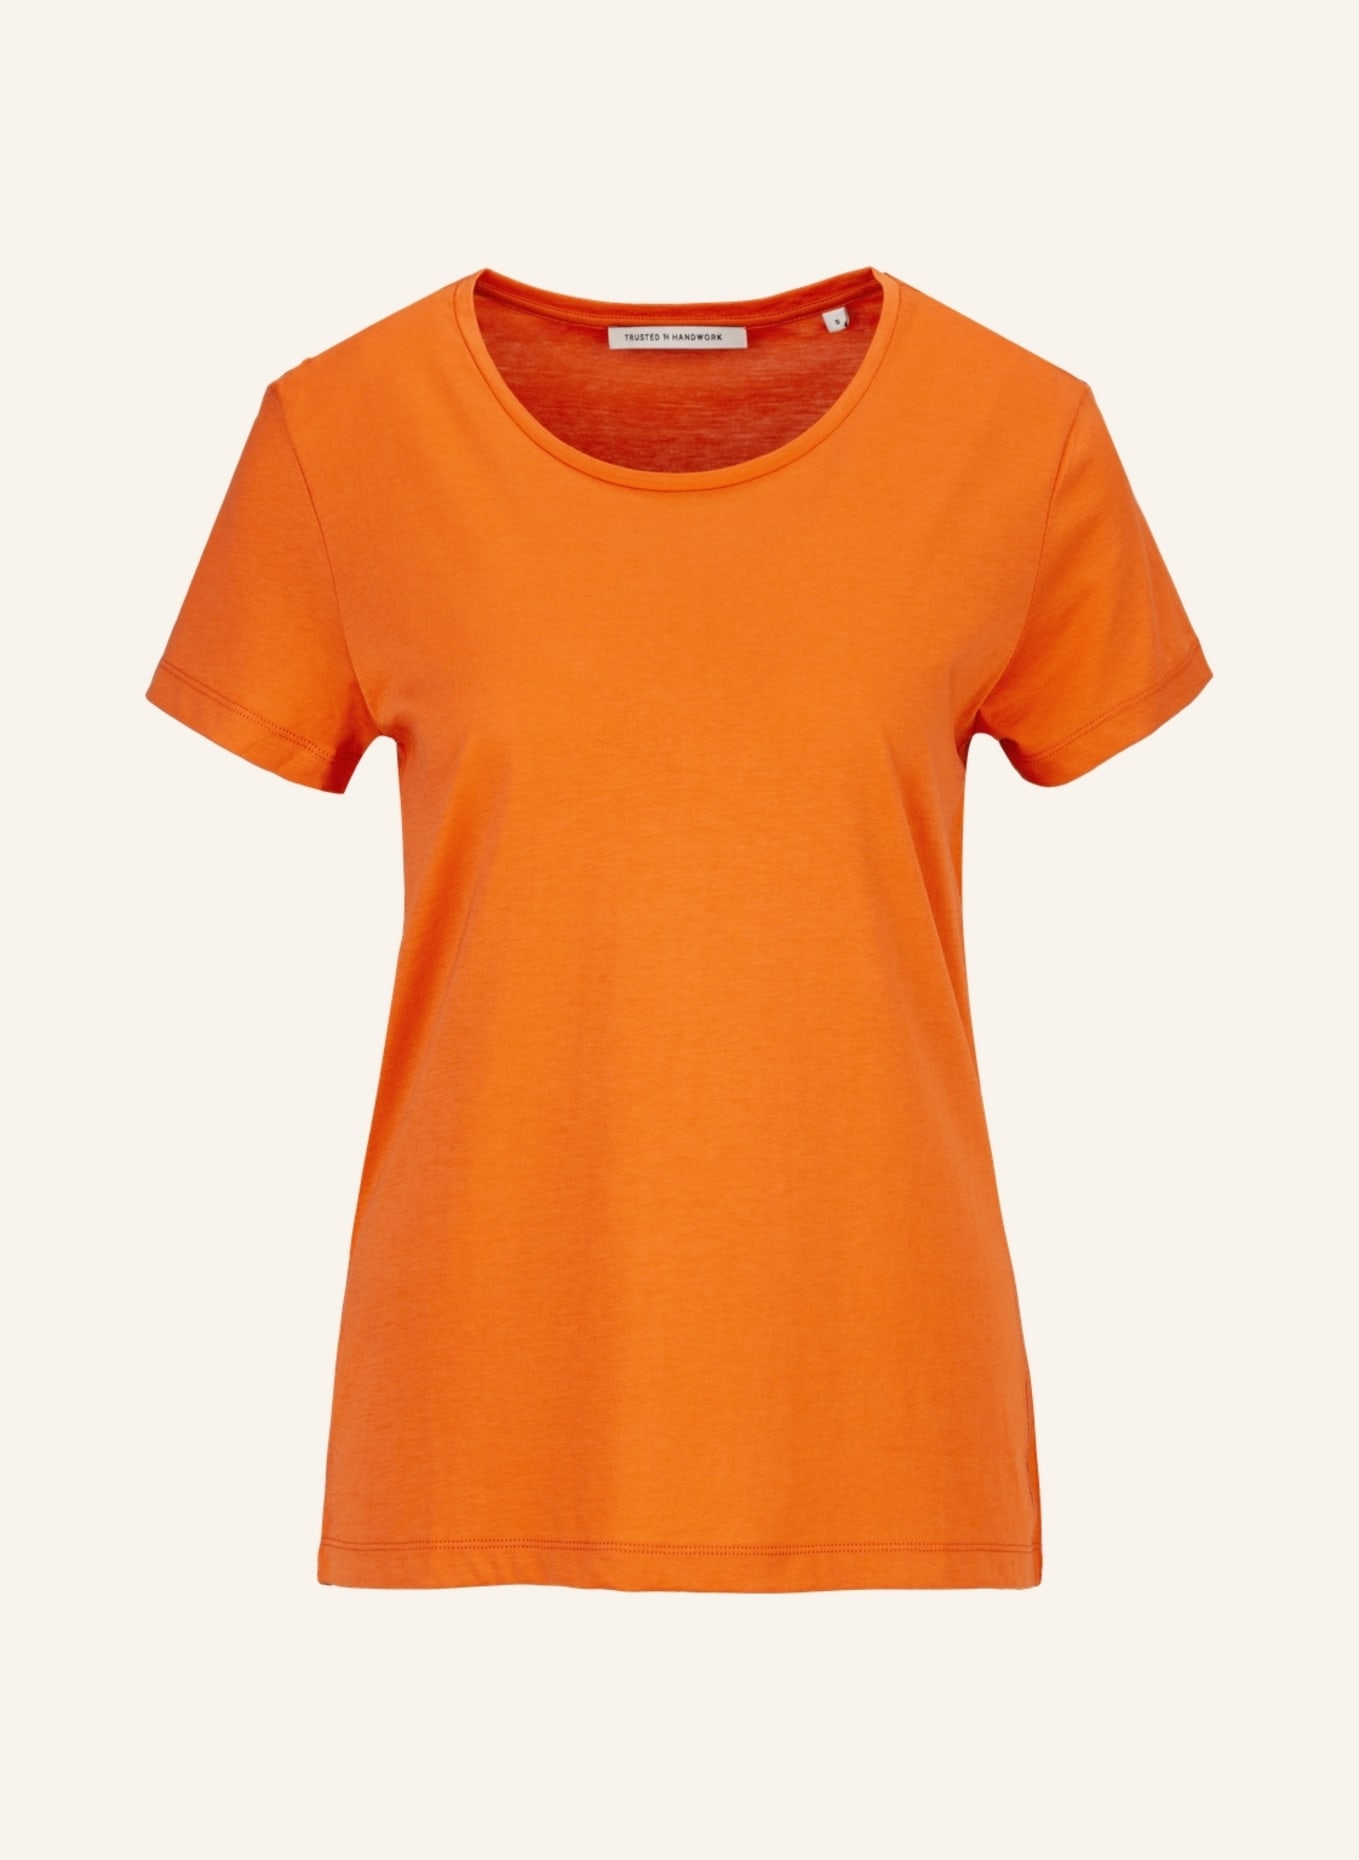 Футболка TRUSTED HANDWORK PARIS, оранжевый футболка trusted handwork fitted светло серый